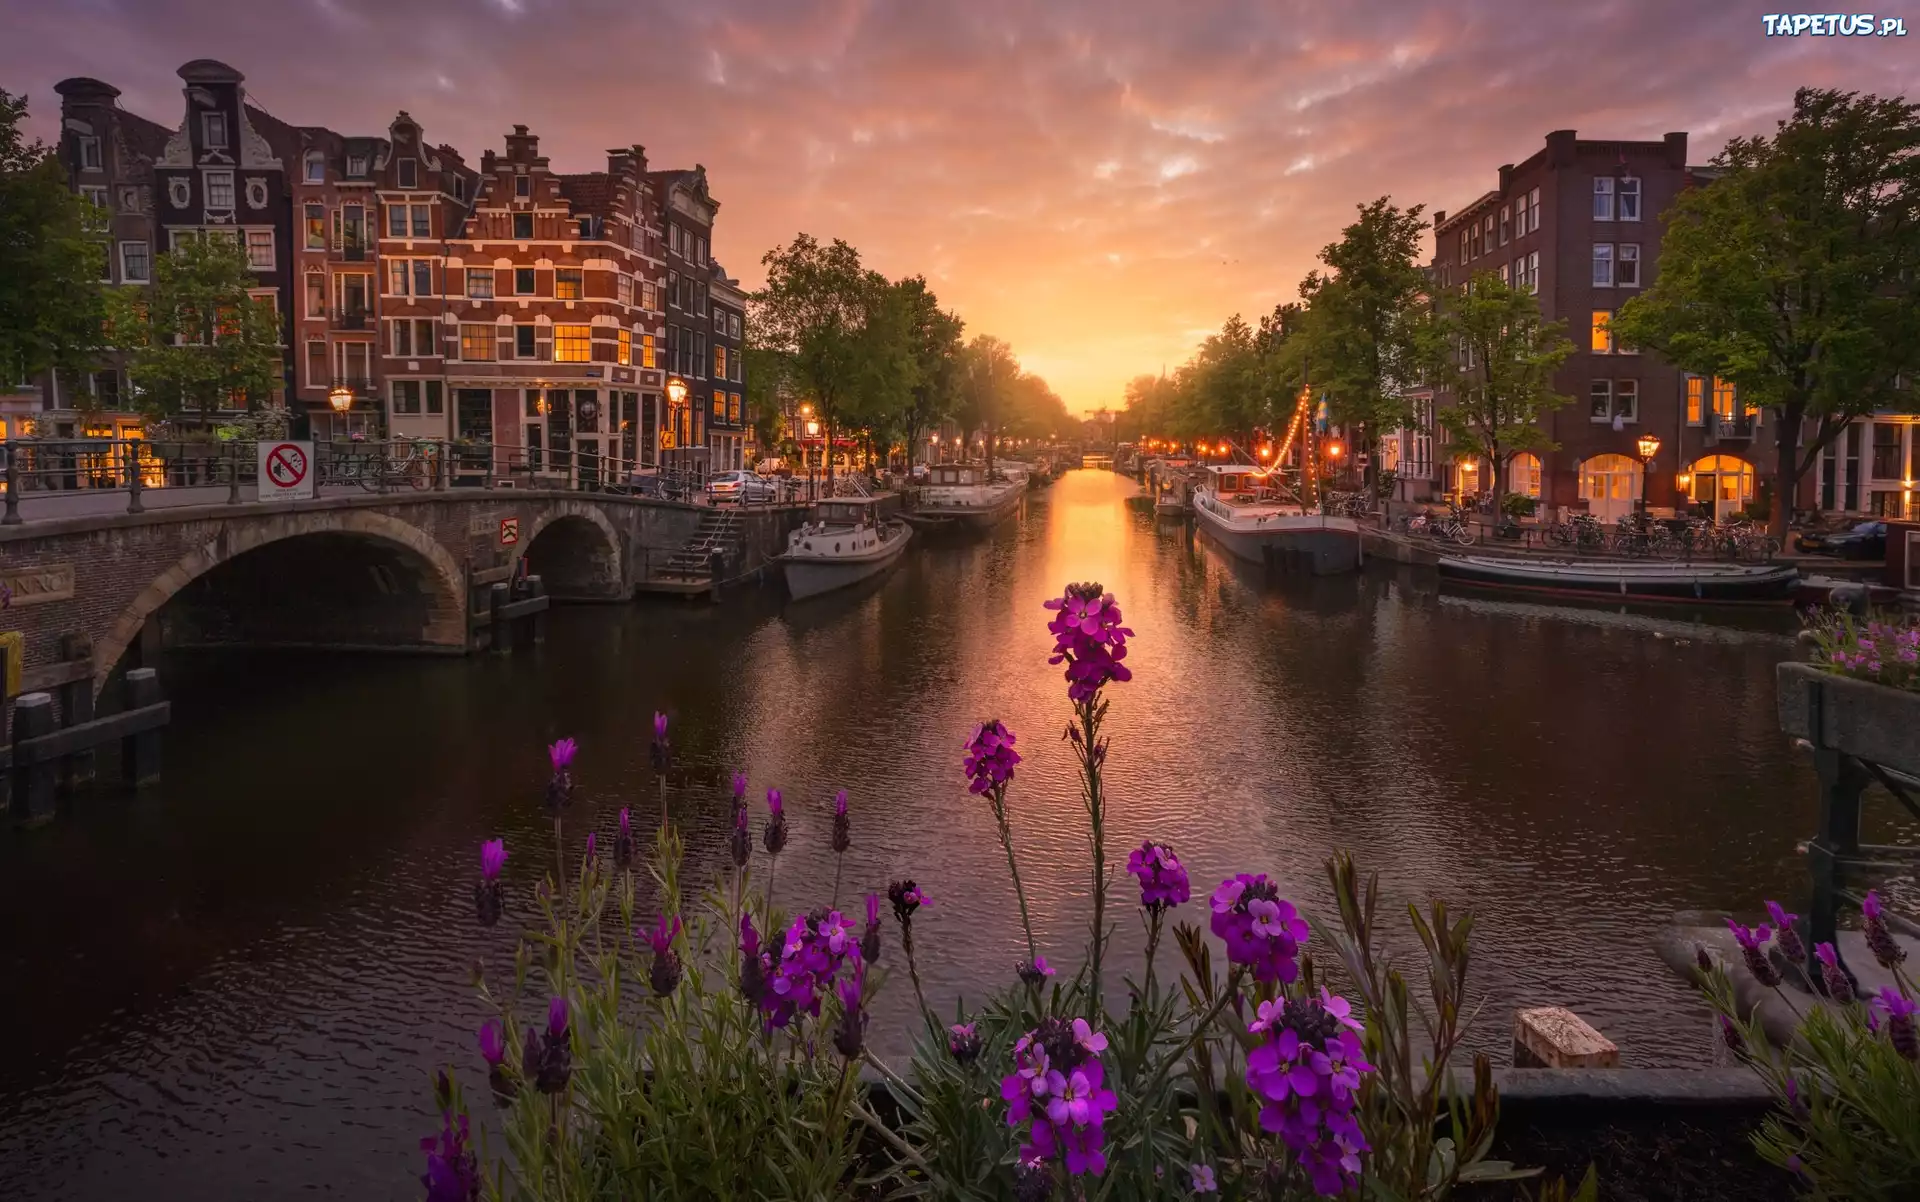 Holandia, Amsterdam, Domy, Kana?, Most, Kwiaty, Zach?d s?o?ca